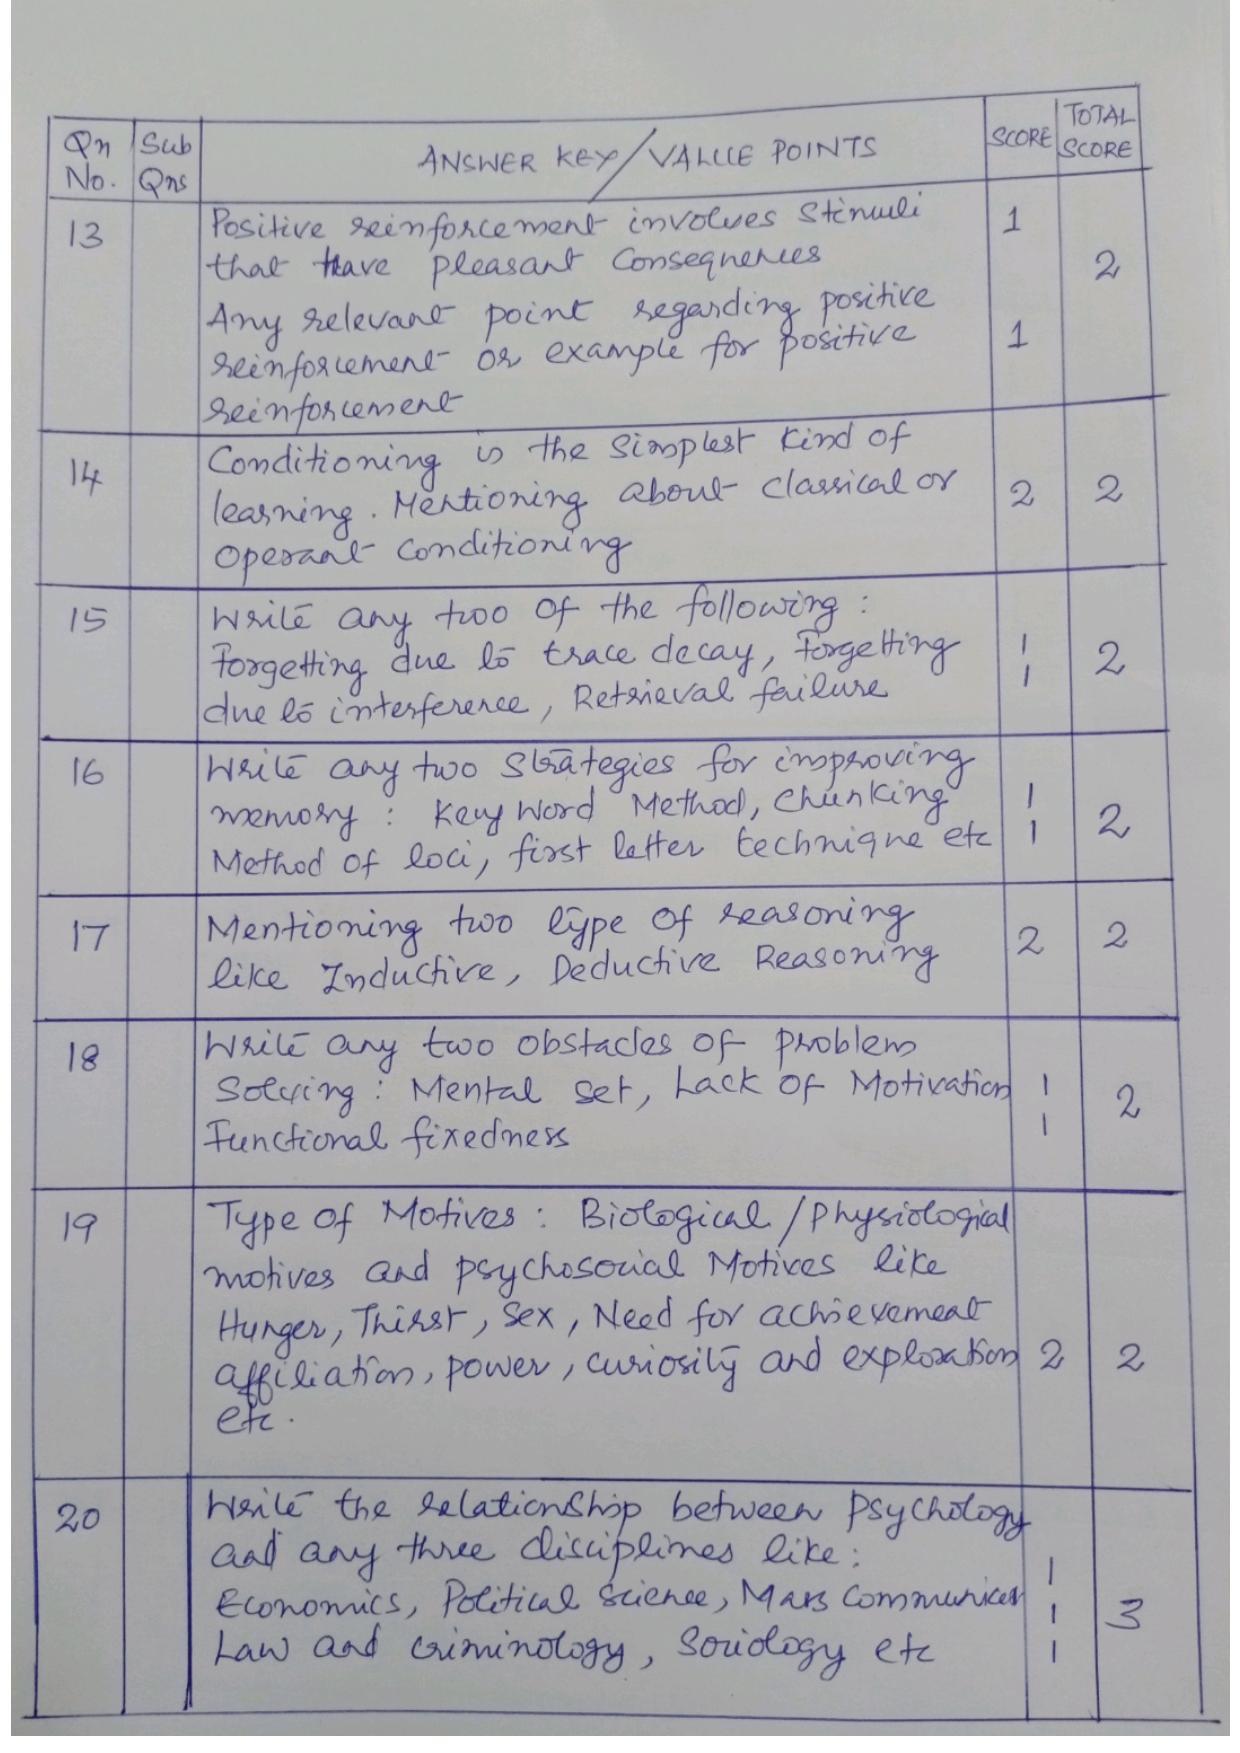 Kerala Plus One (Class 11th) Psychology Answer Key 2021 - Page 2